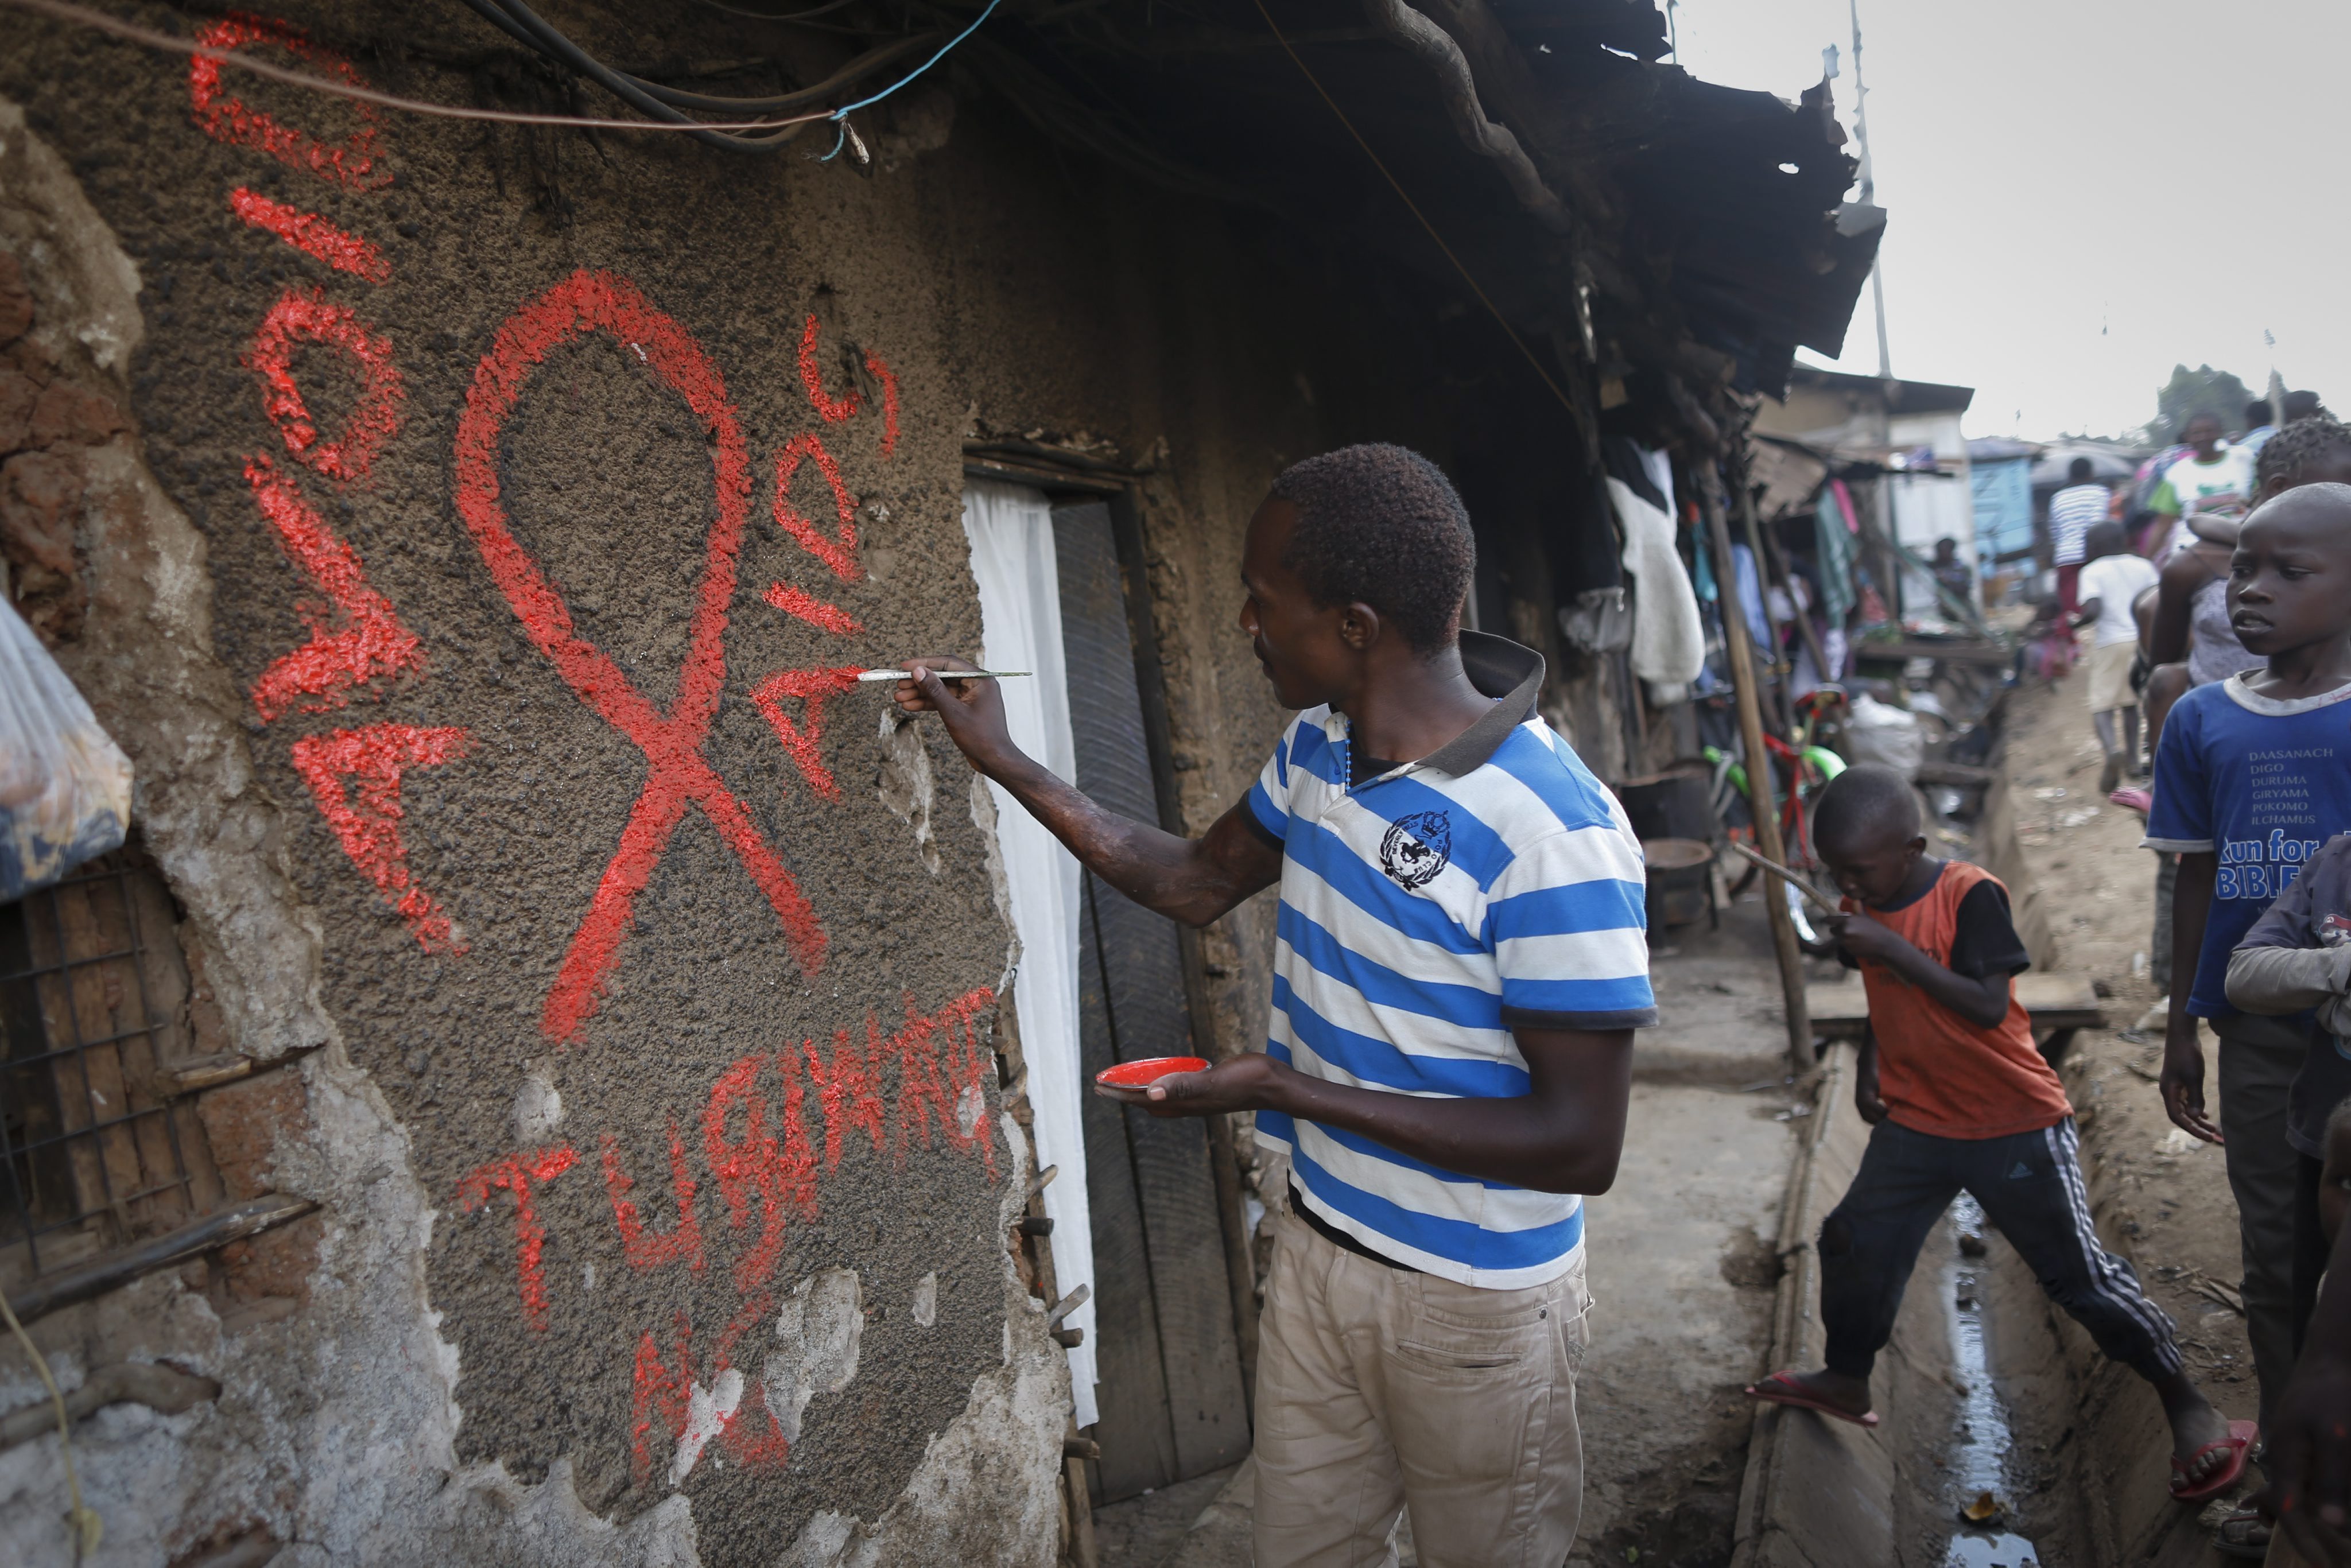 DIA MUNDIAL DEL SIDA EN KENIA